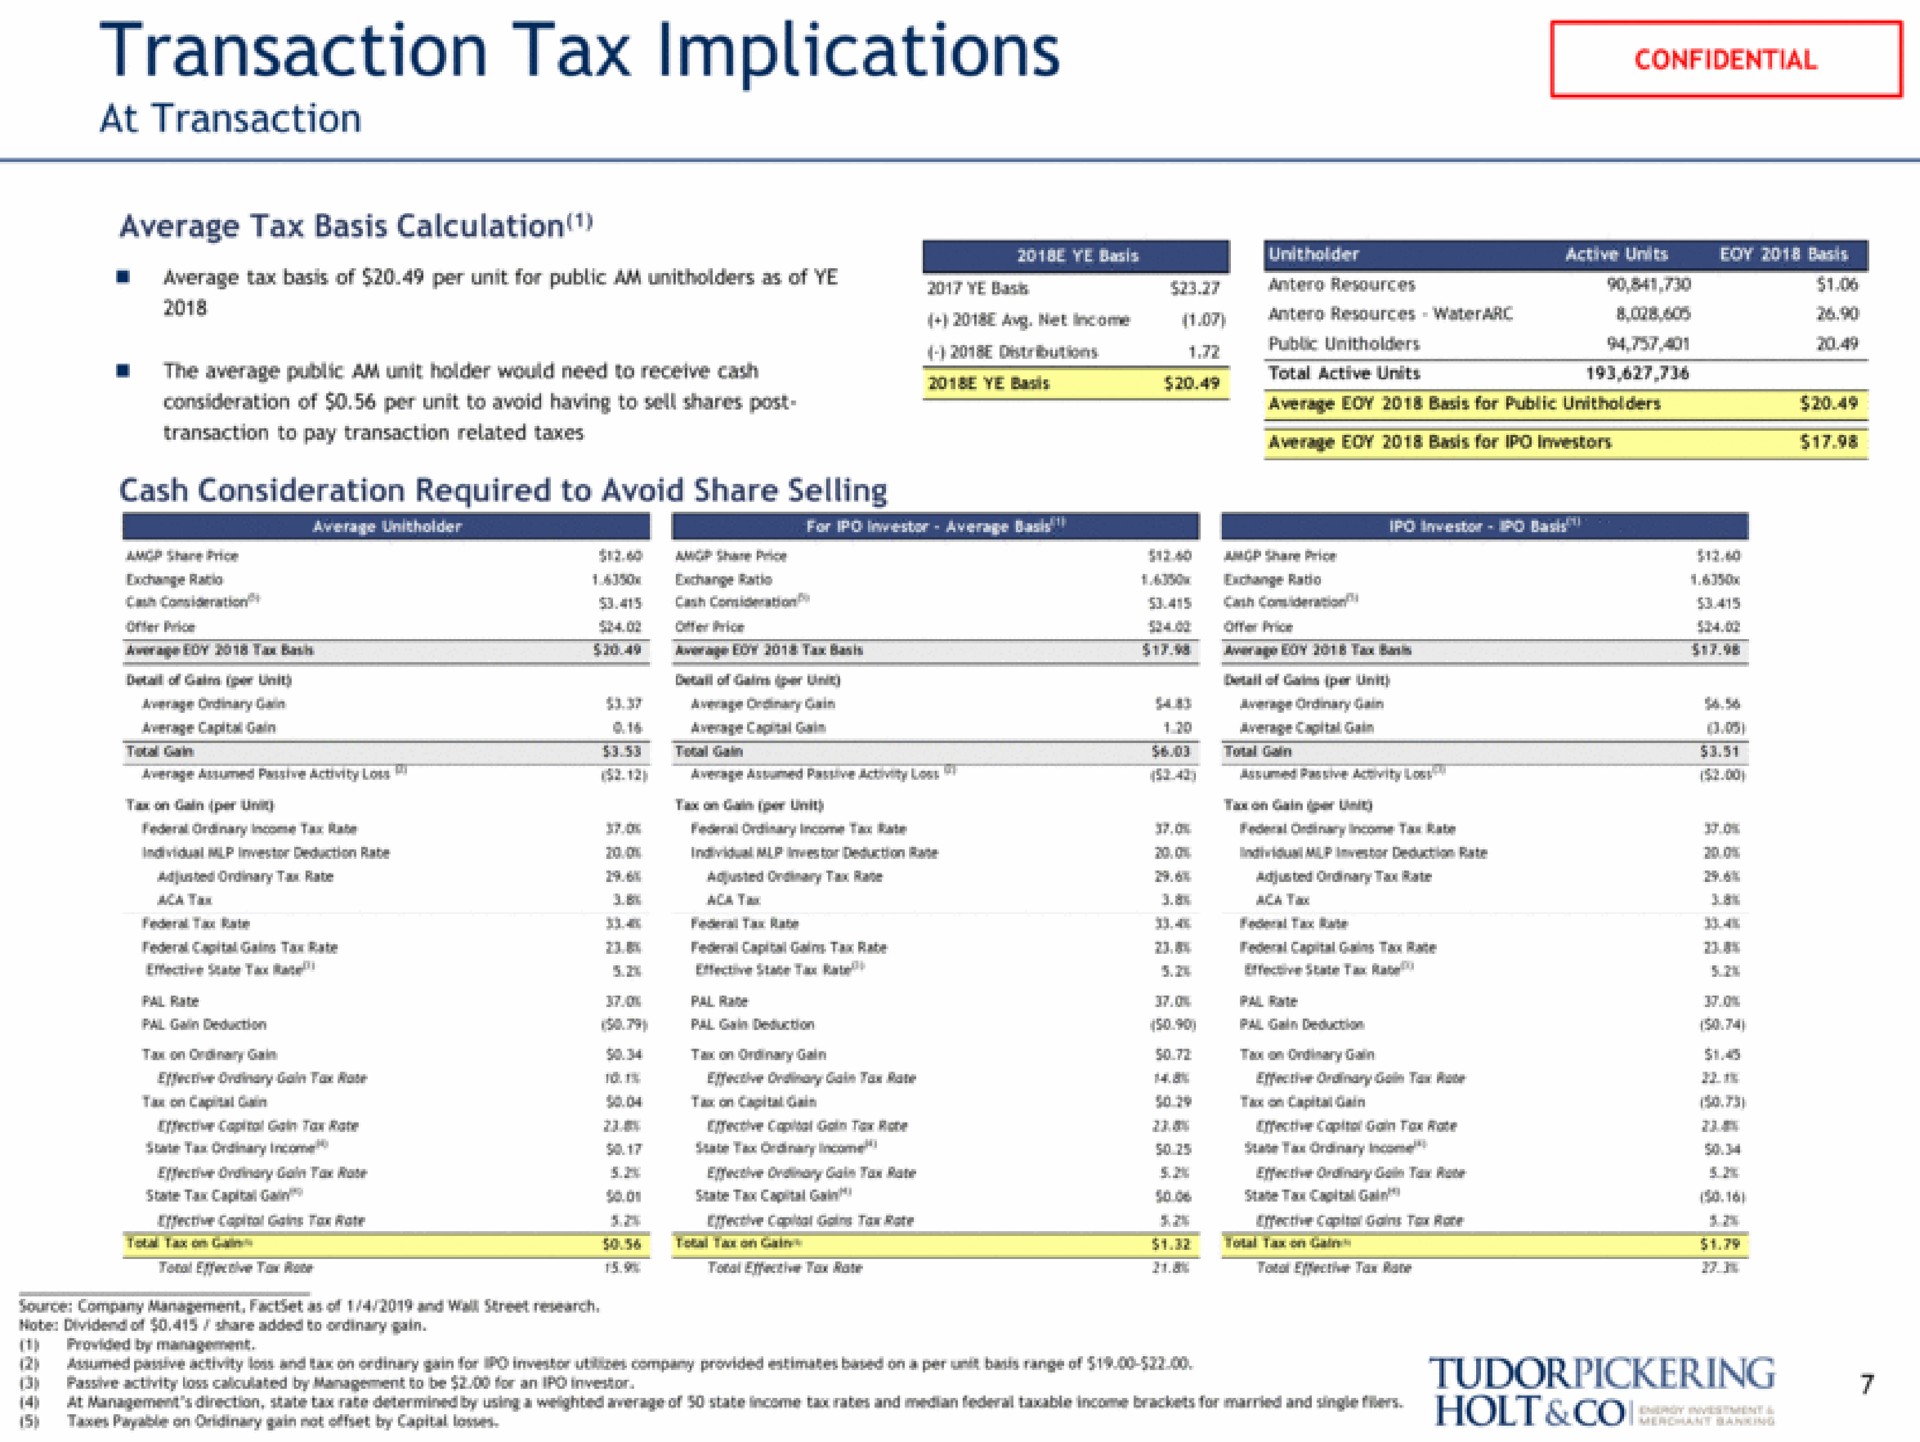 transaction tax implications holt | Tudor, Pickering, Holt & Co